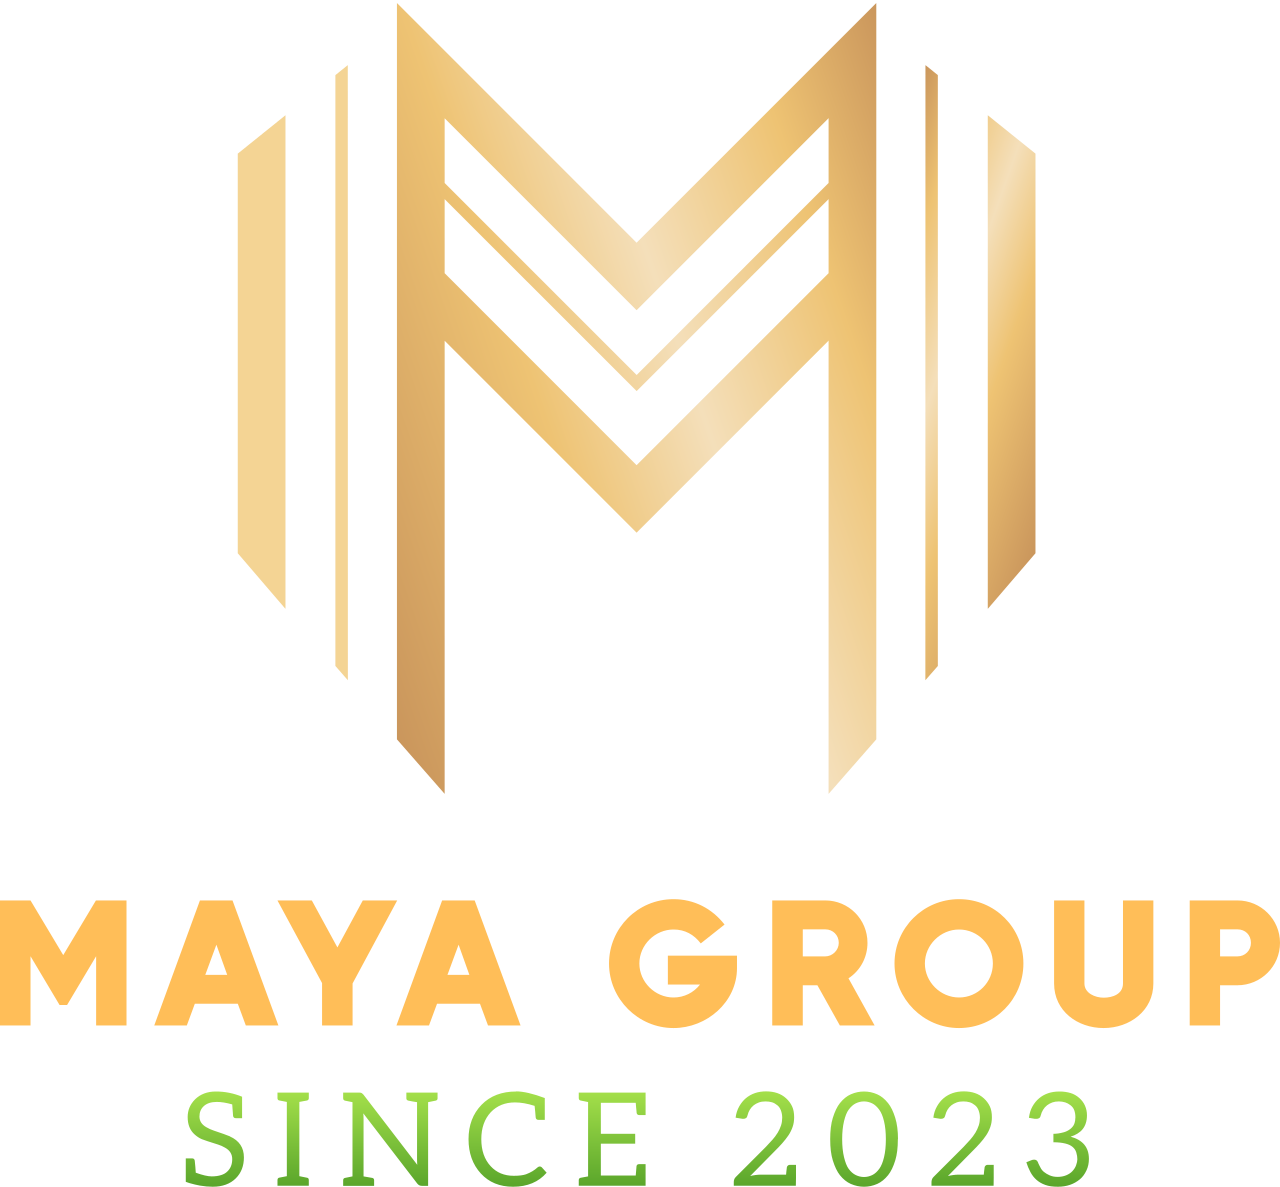 Maya Group's logo